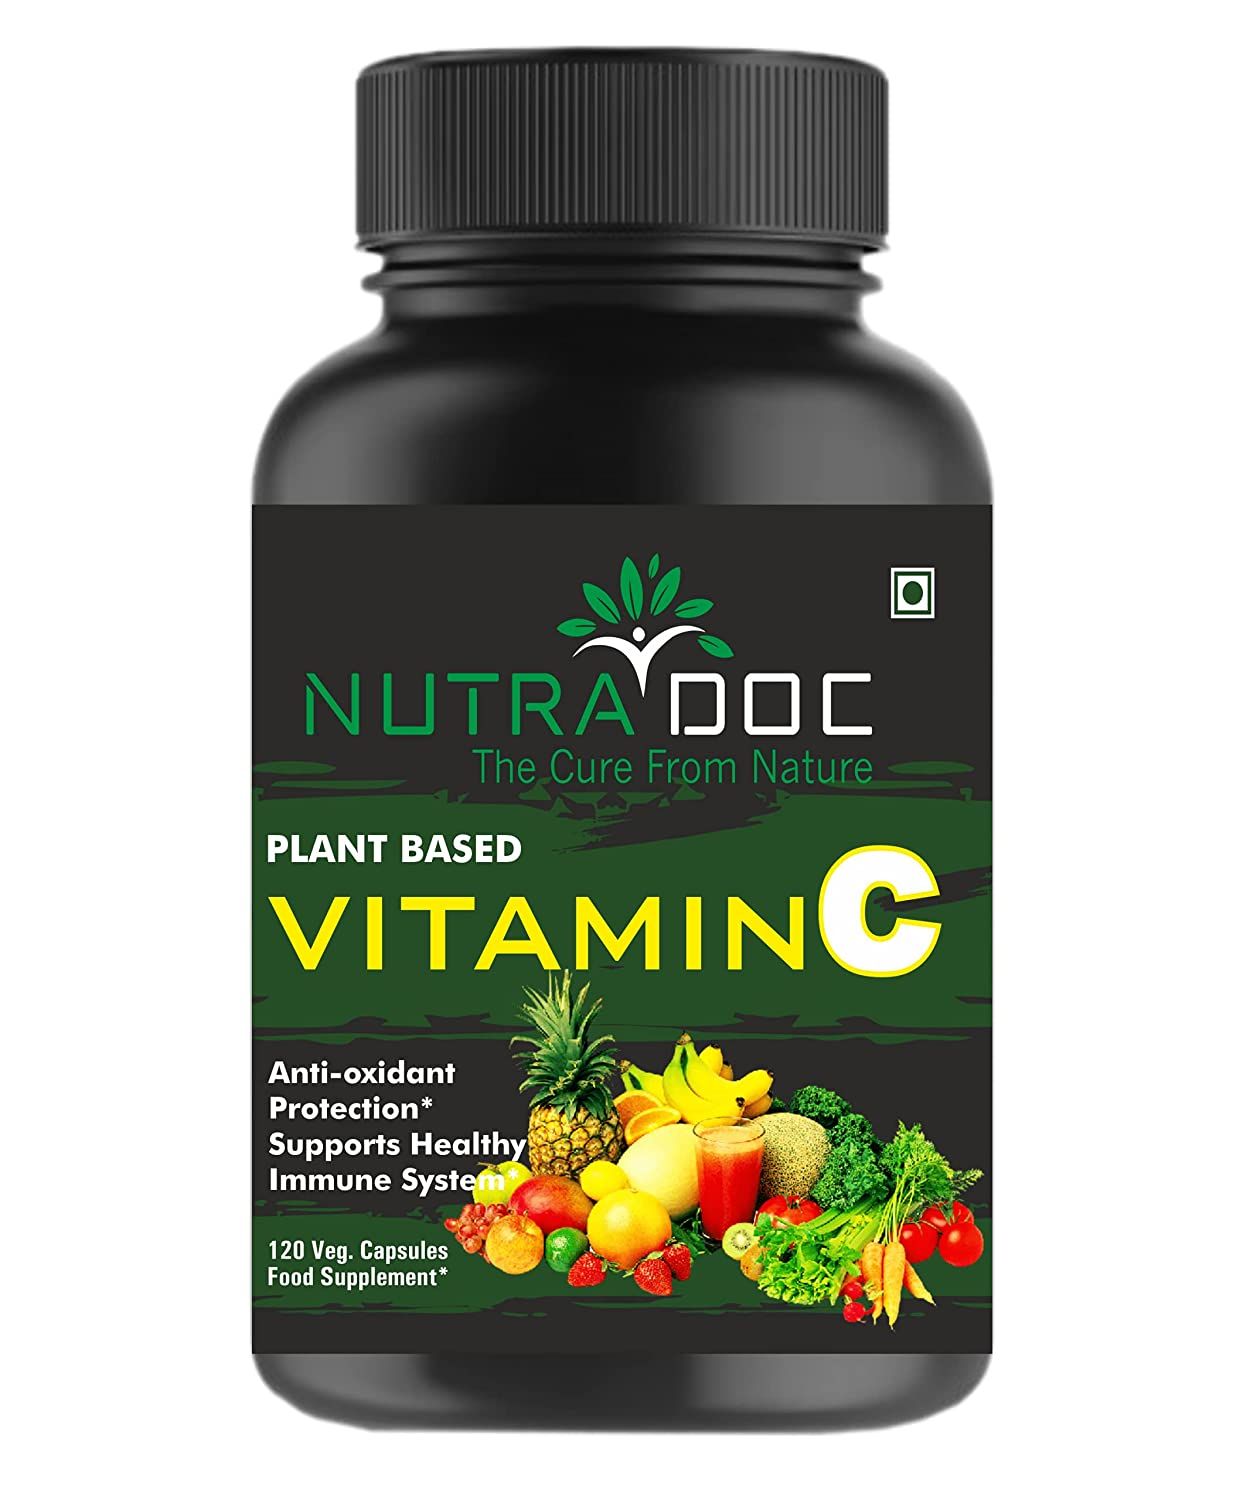 Nutradoc Plant Based Vitamin C Image